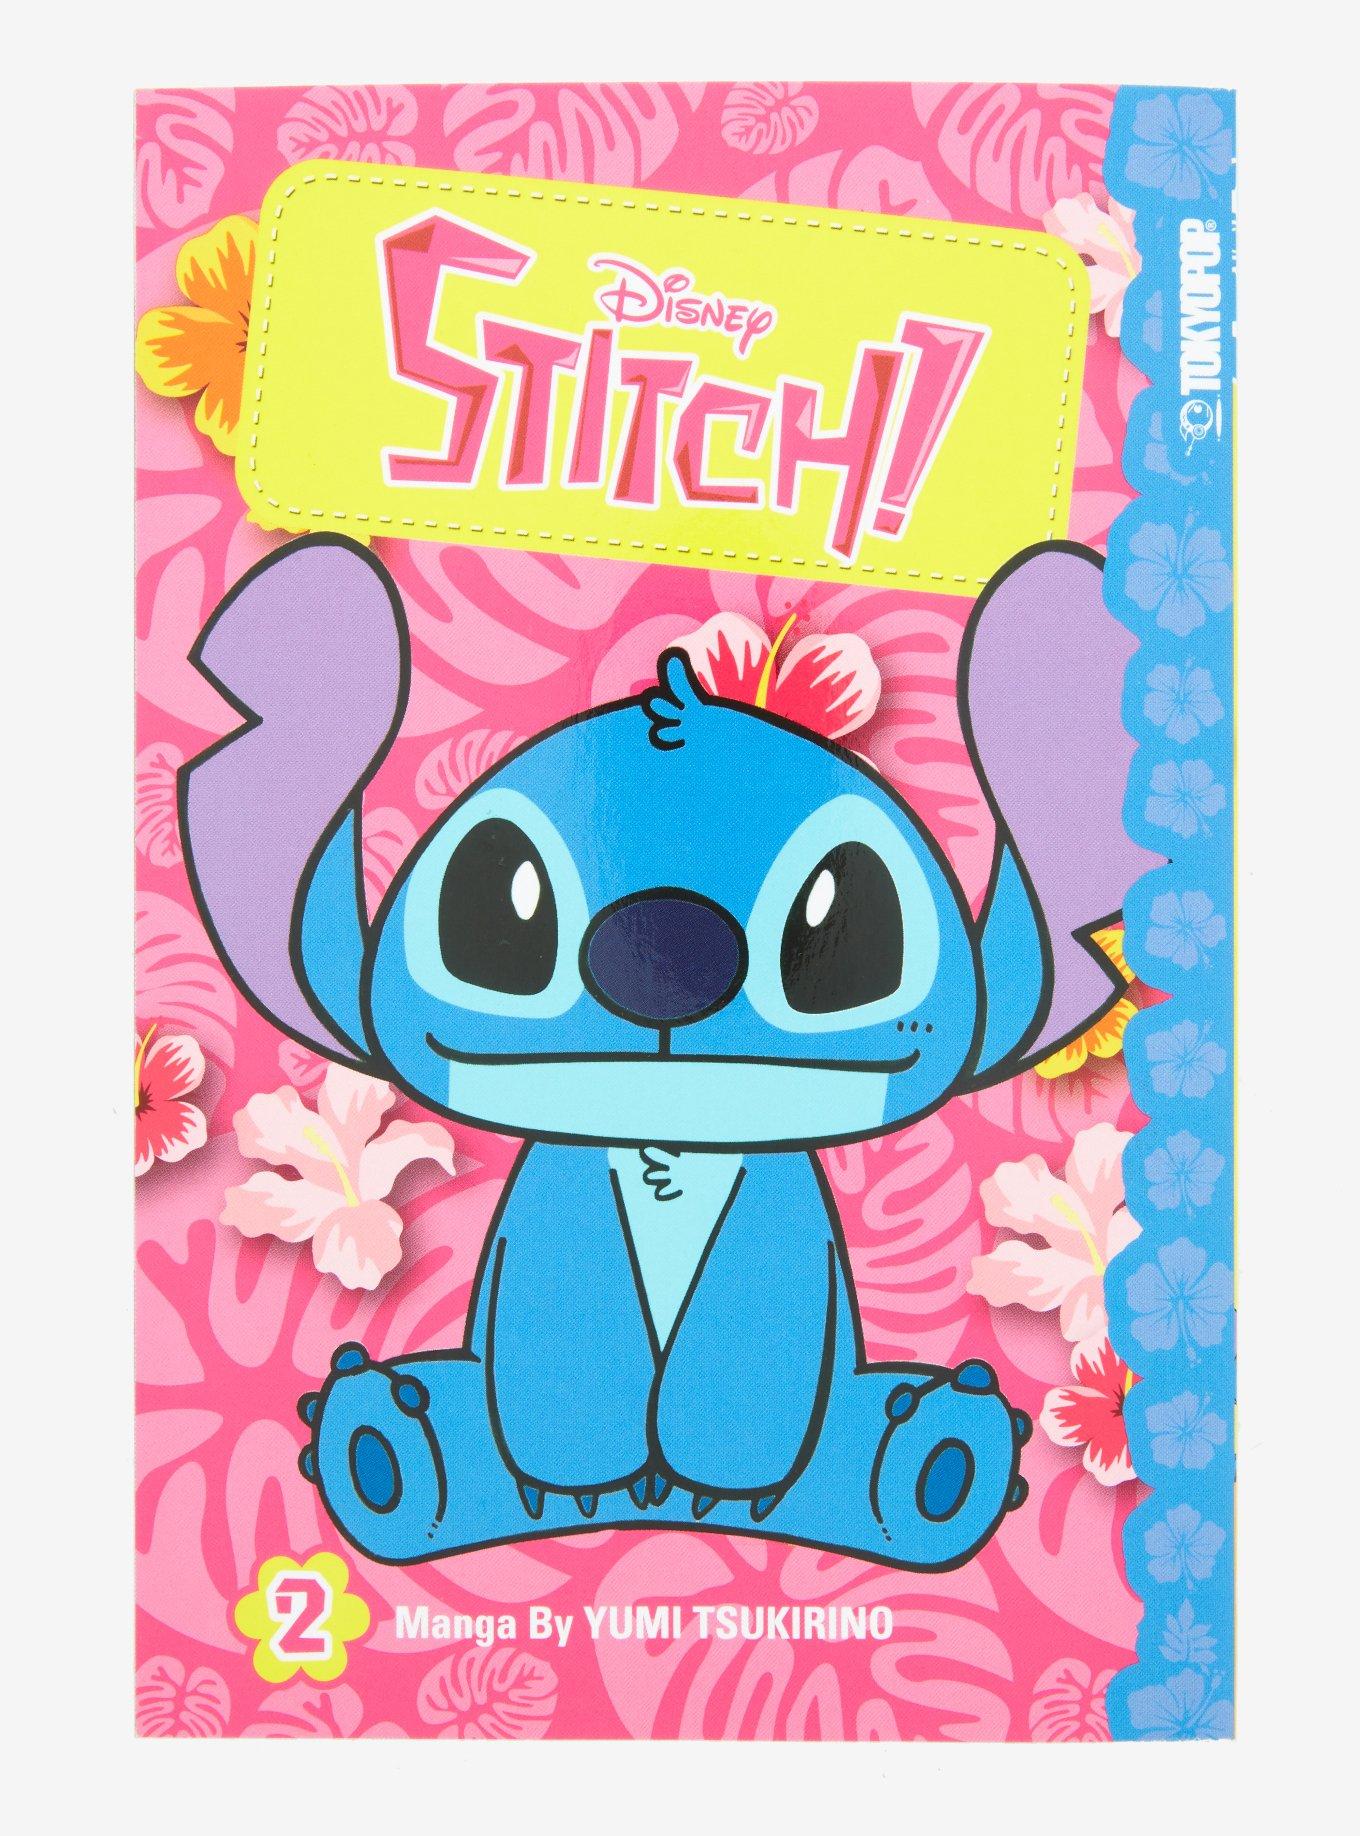 Disney Stitch and the Samurai vol. 1 Manga – Tall Man Toys & Comics